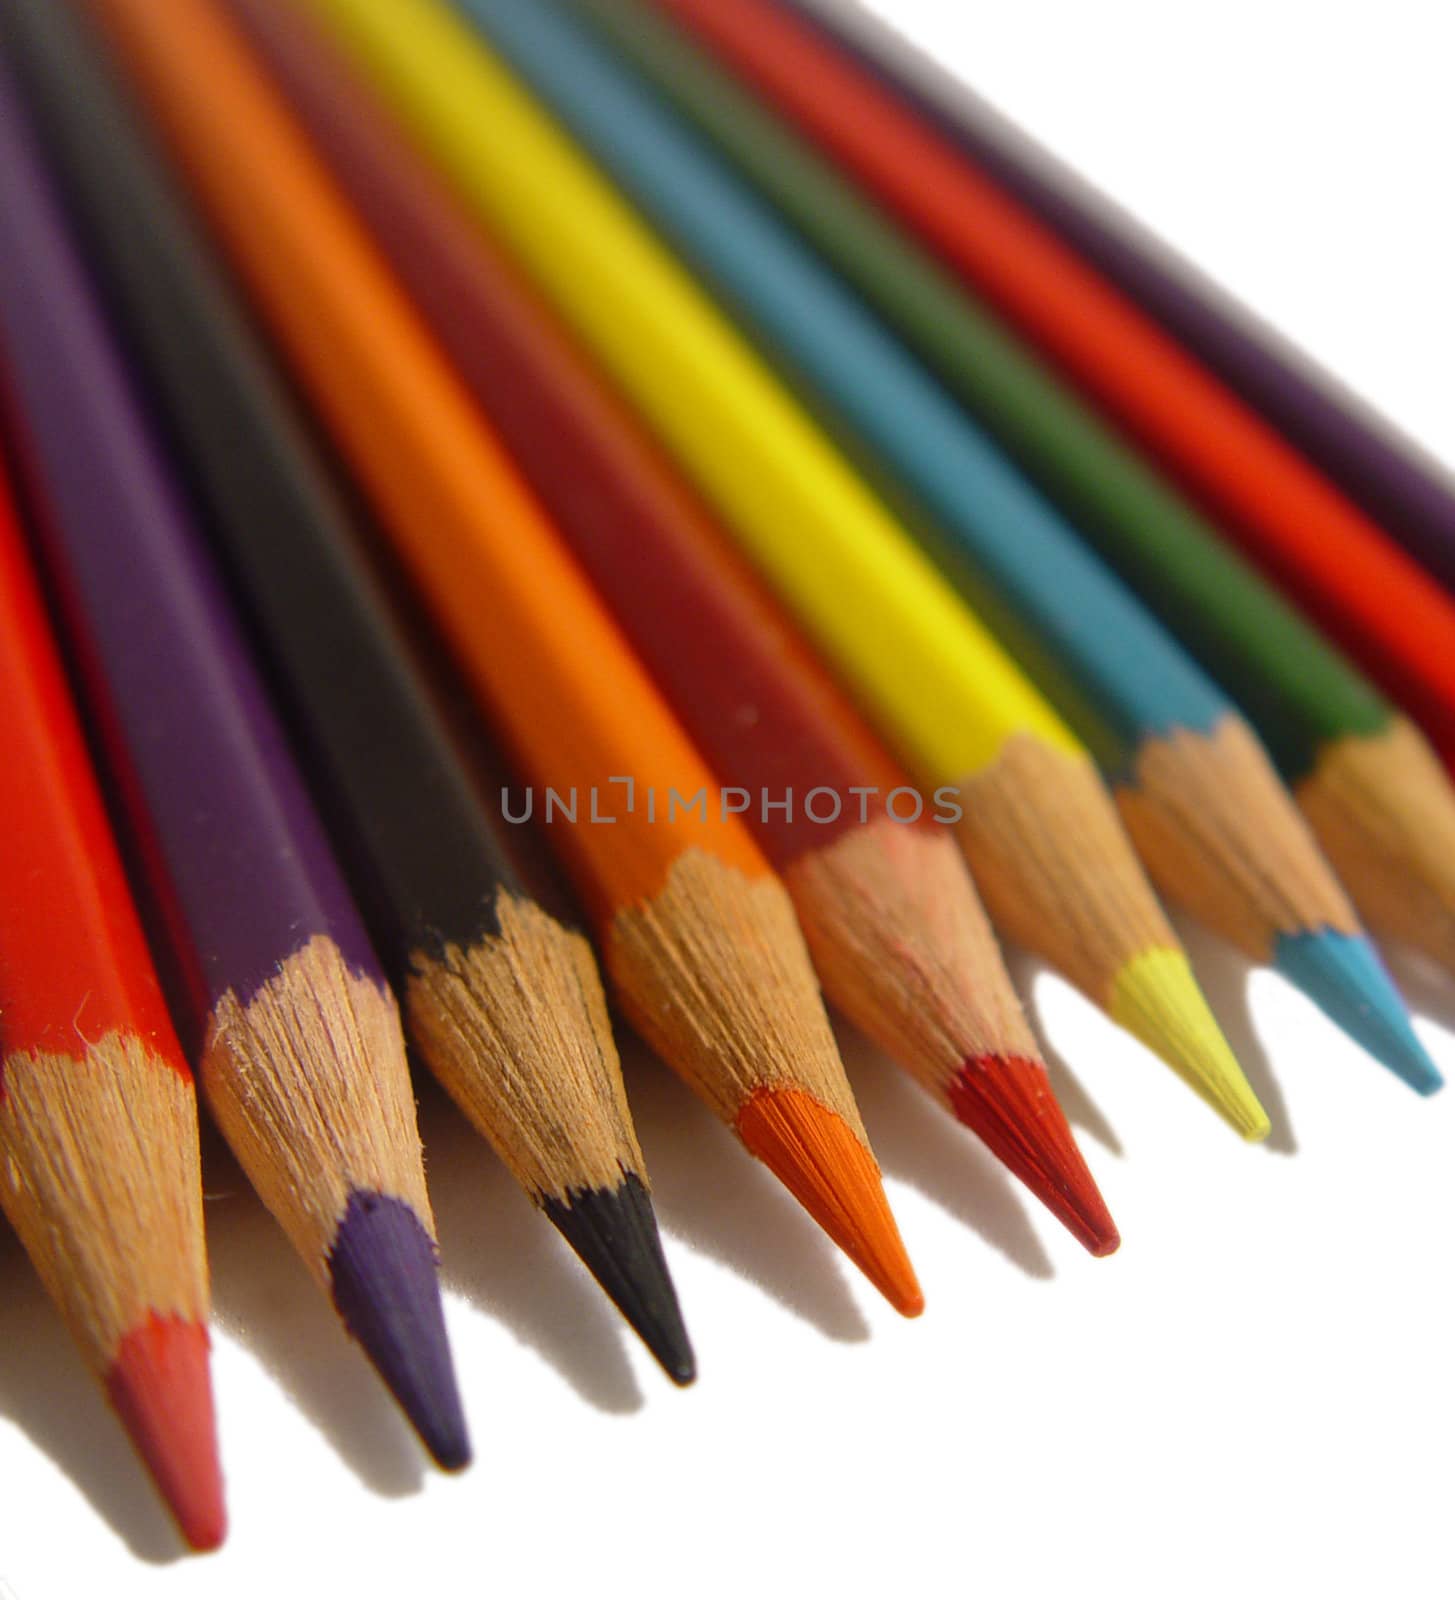 pencils by kjpargeter